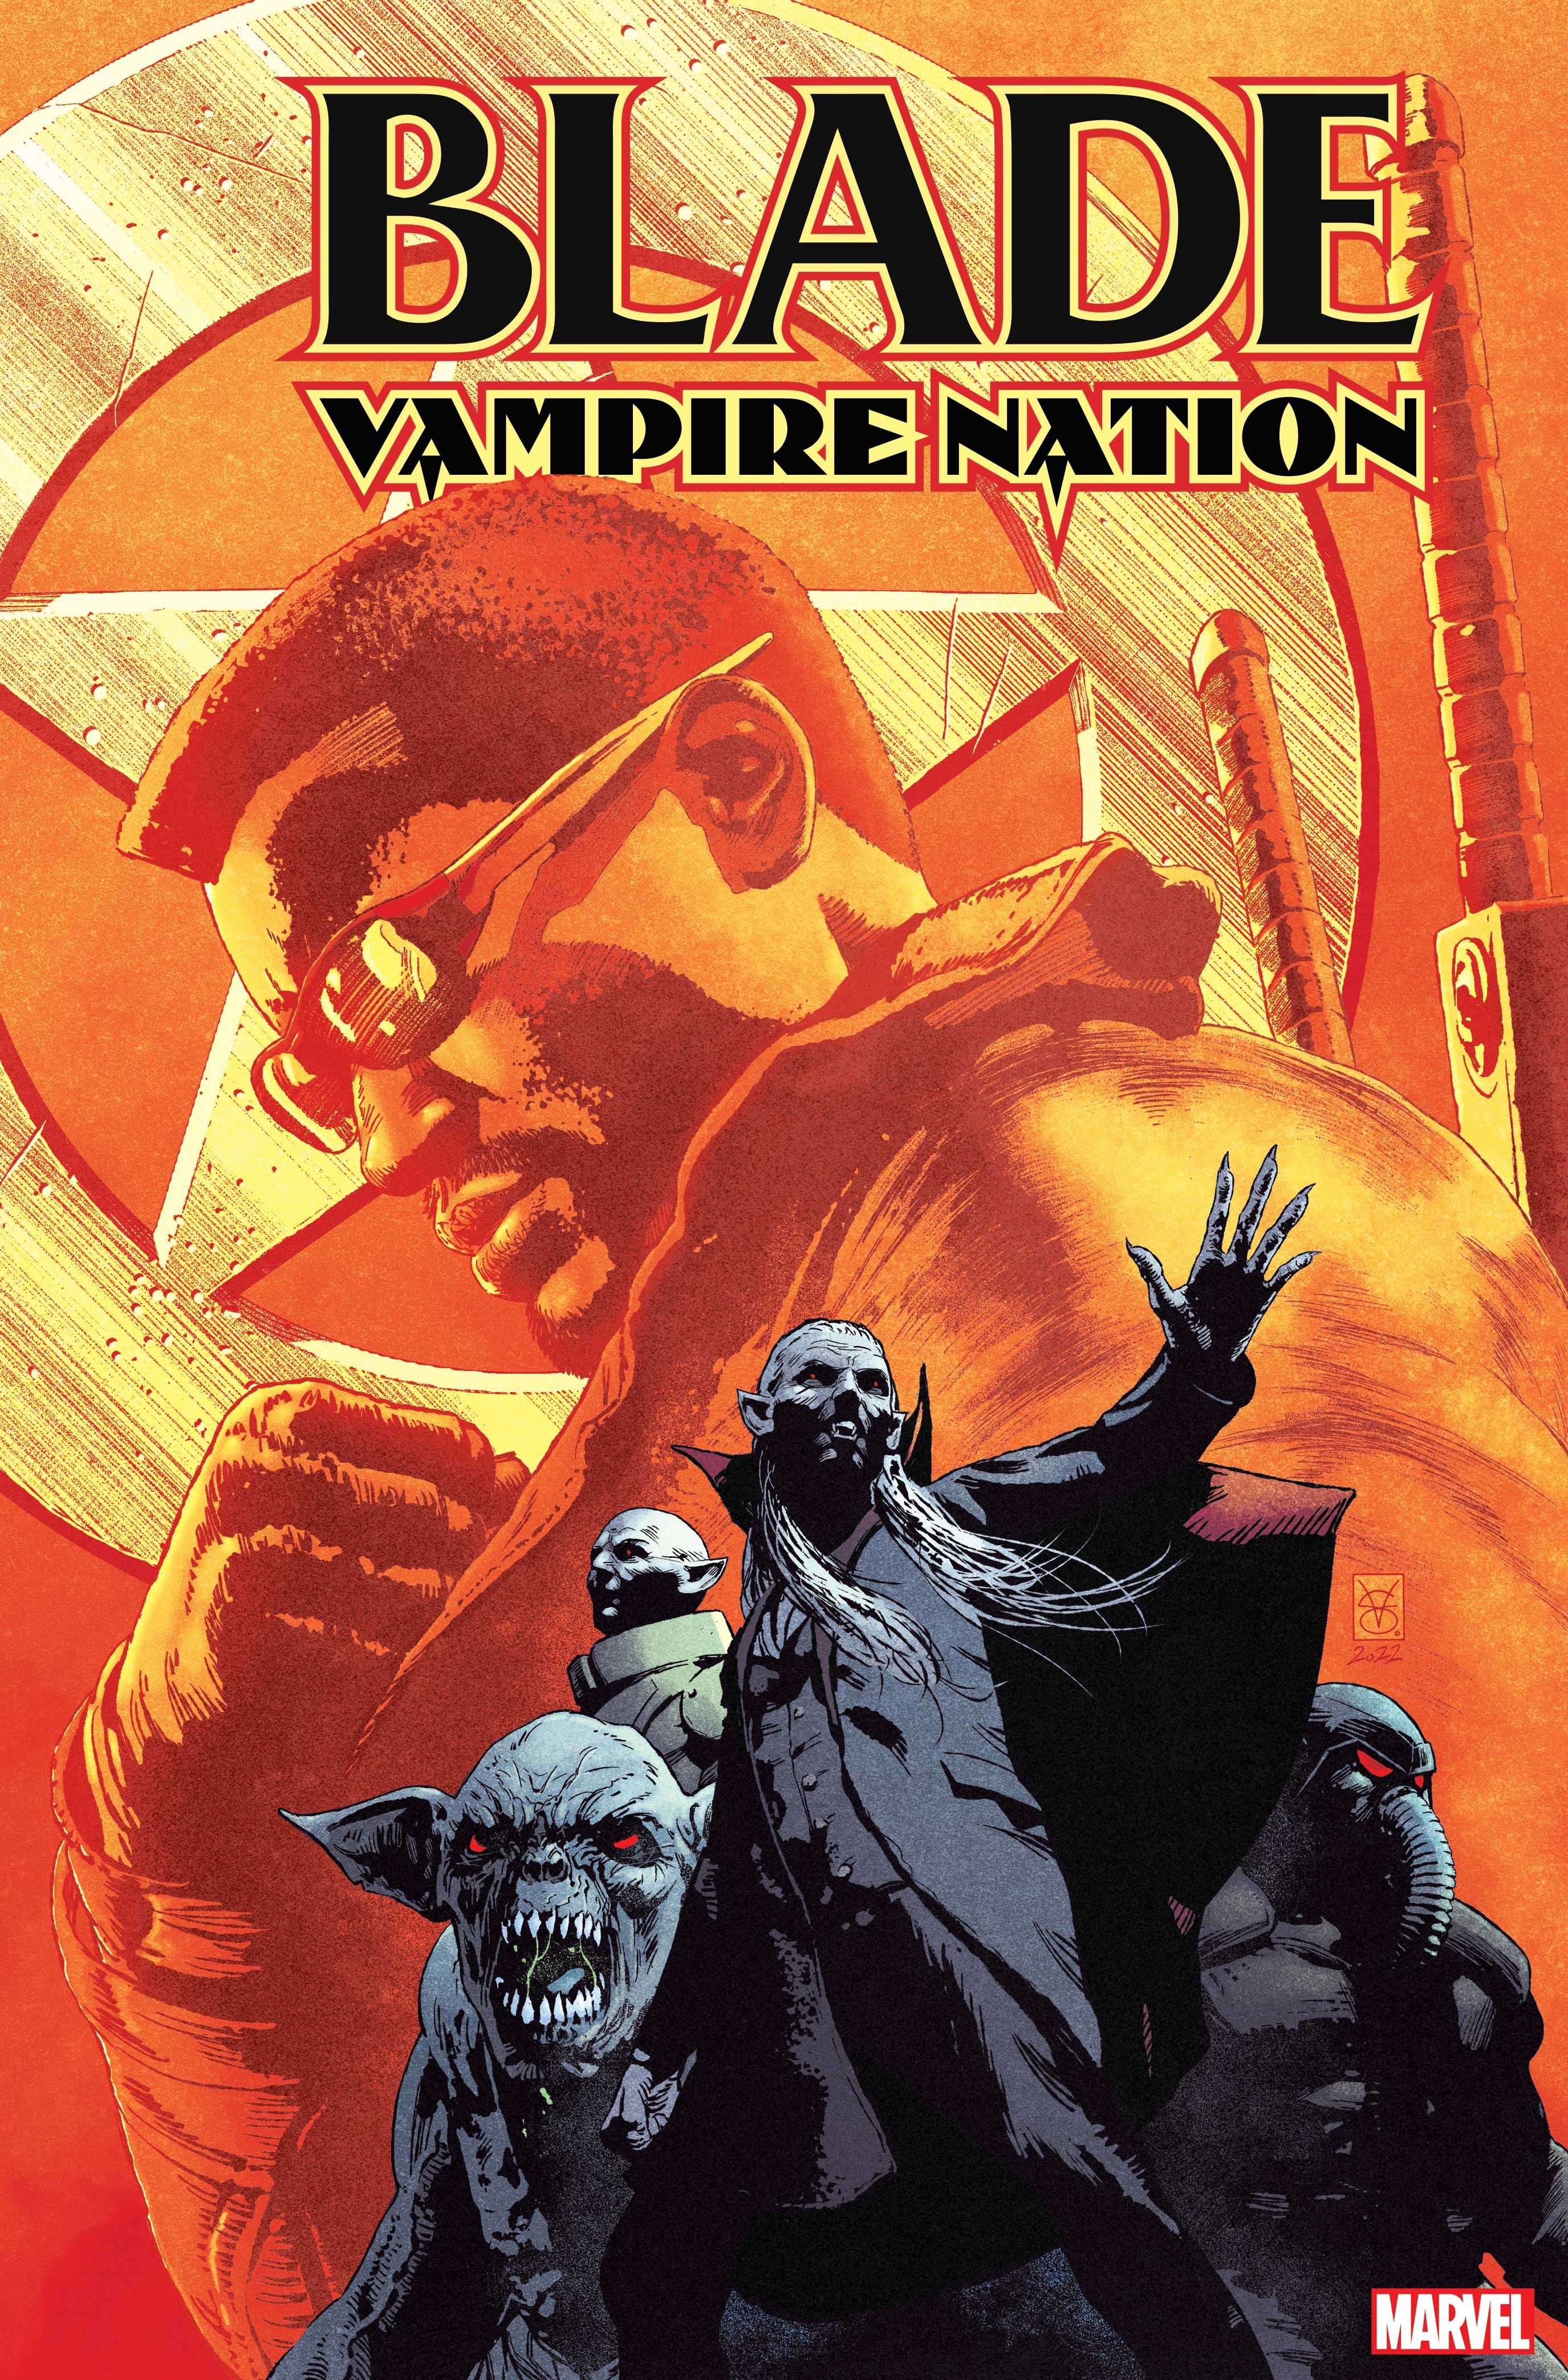 Marvel Announces New Blade Special: Vampire Nation